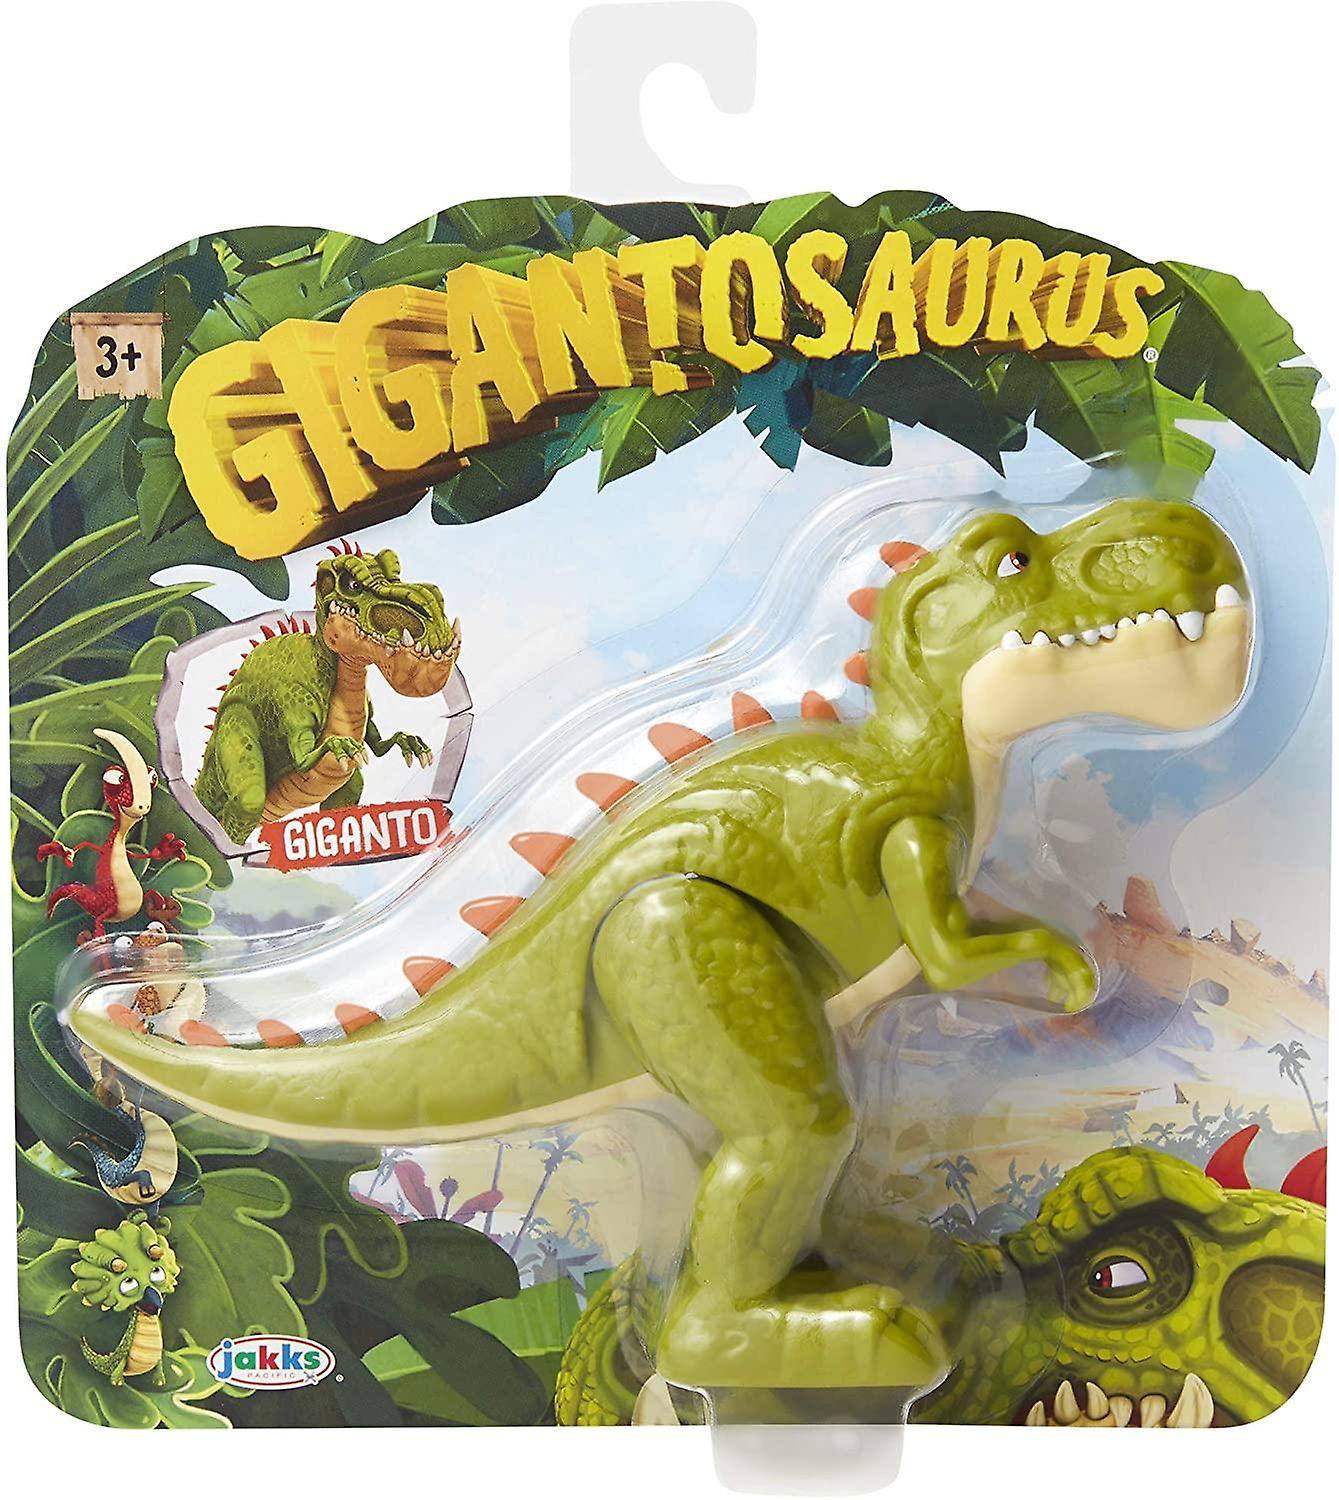 Gigantosaurus Giganto Figure